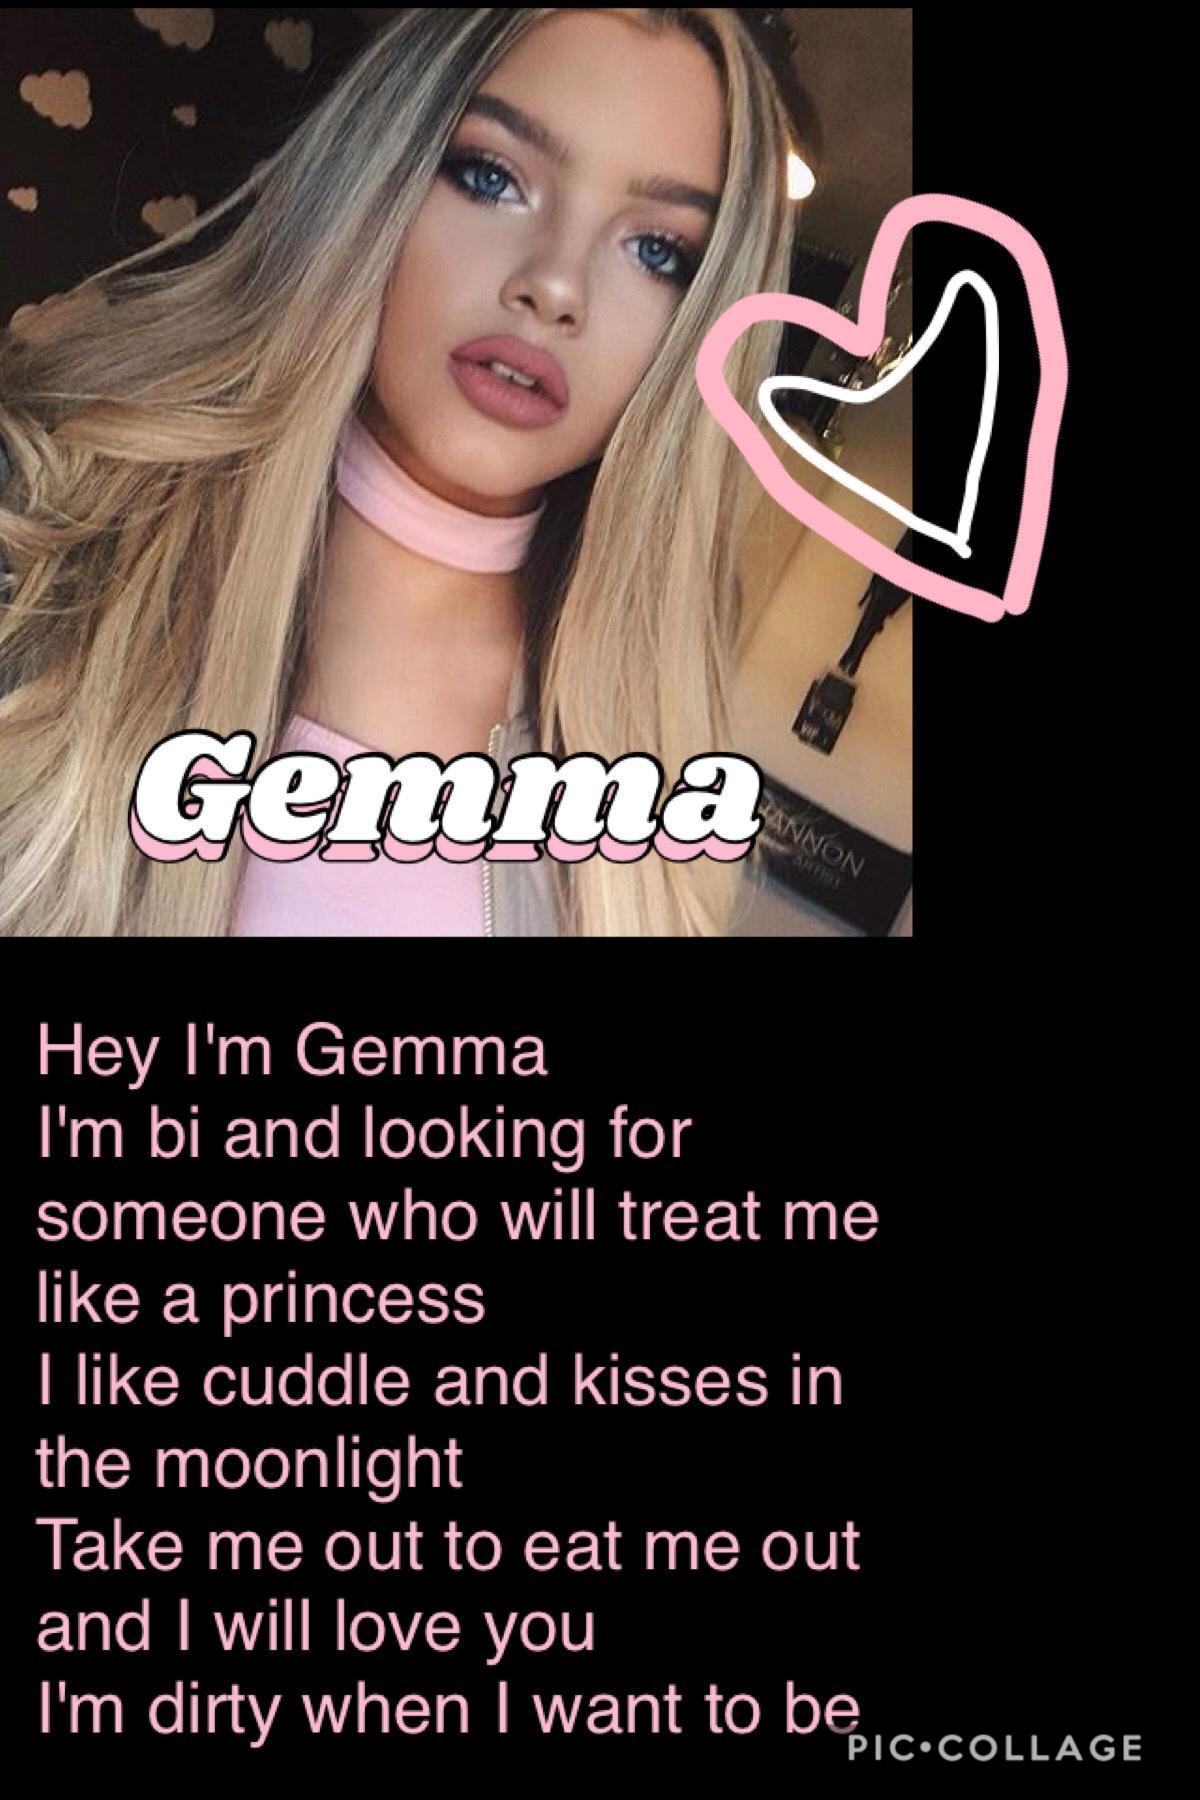 Gemma 